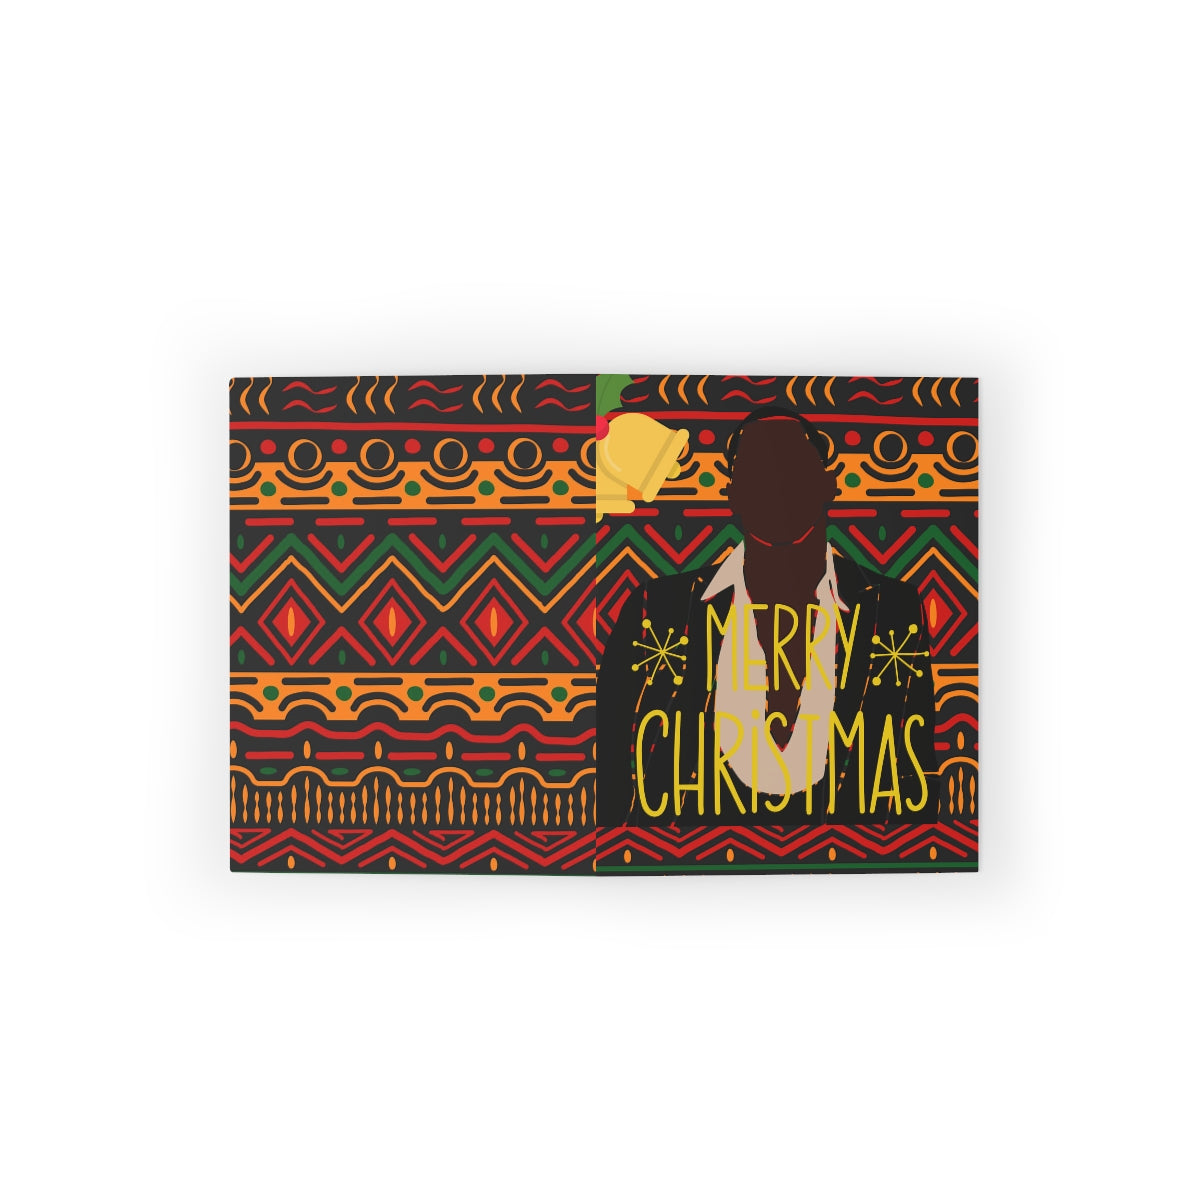 8,16,24pcs/ Ankara Christmas Cards/ African American Christmas Cards/ Black Greeting Cards/ Ankara Holiday Cards/ Black Art Christmas